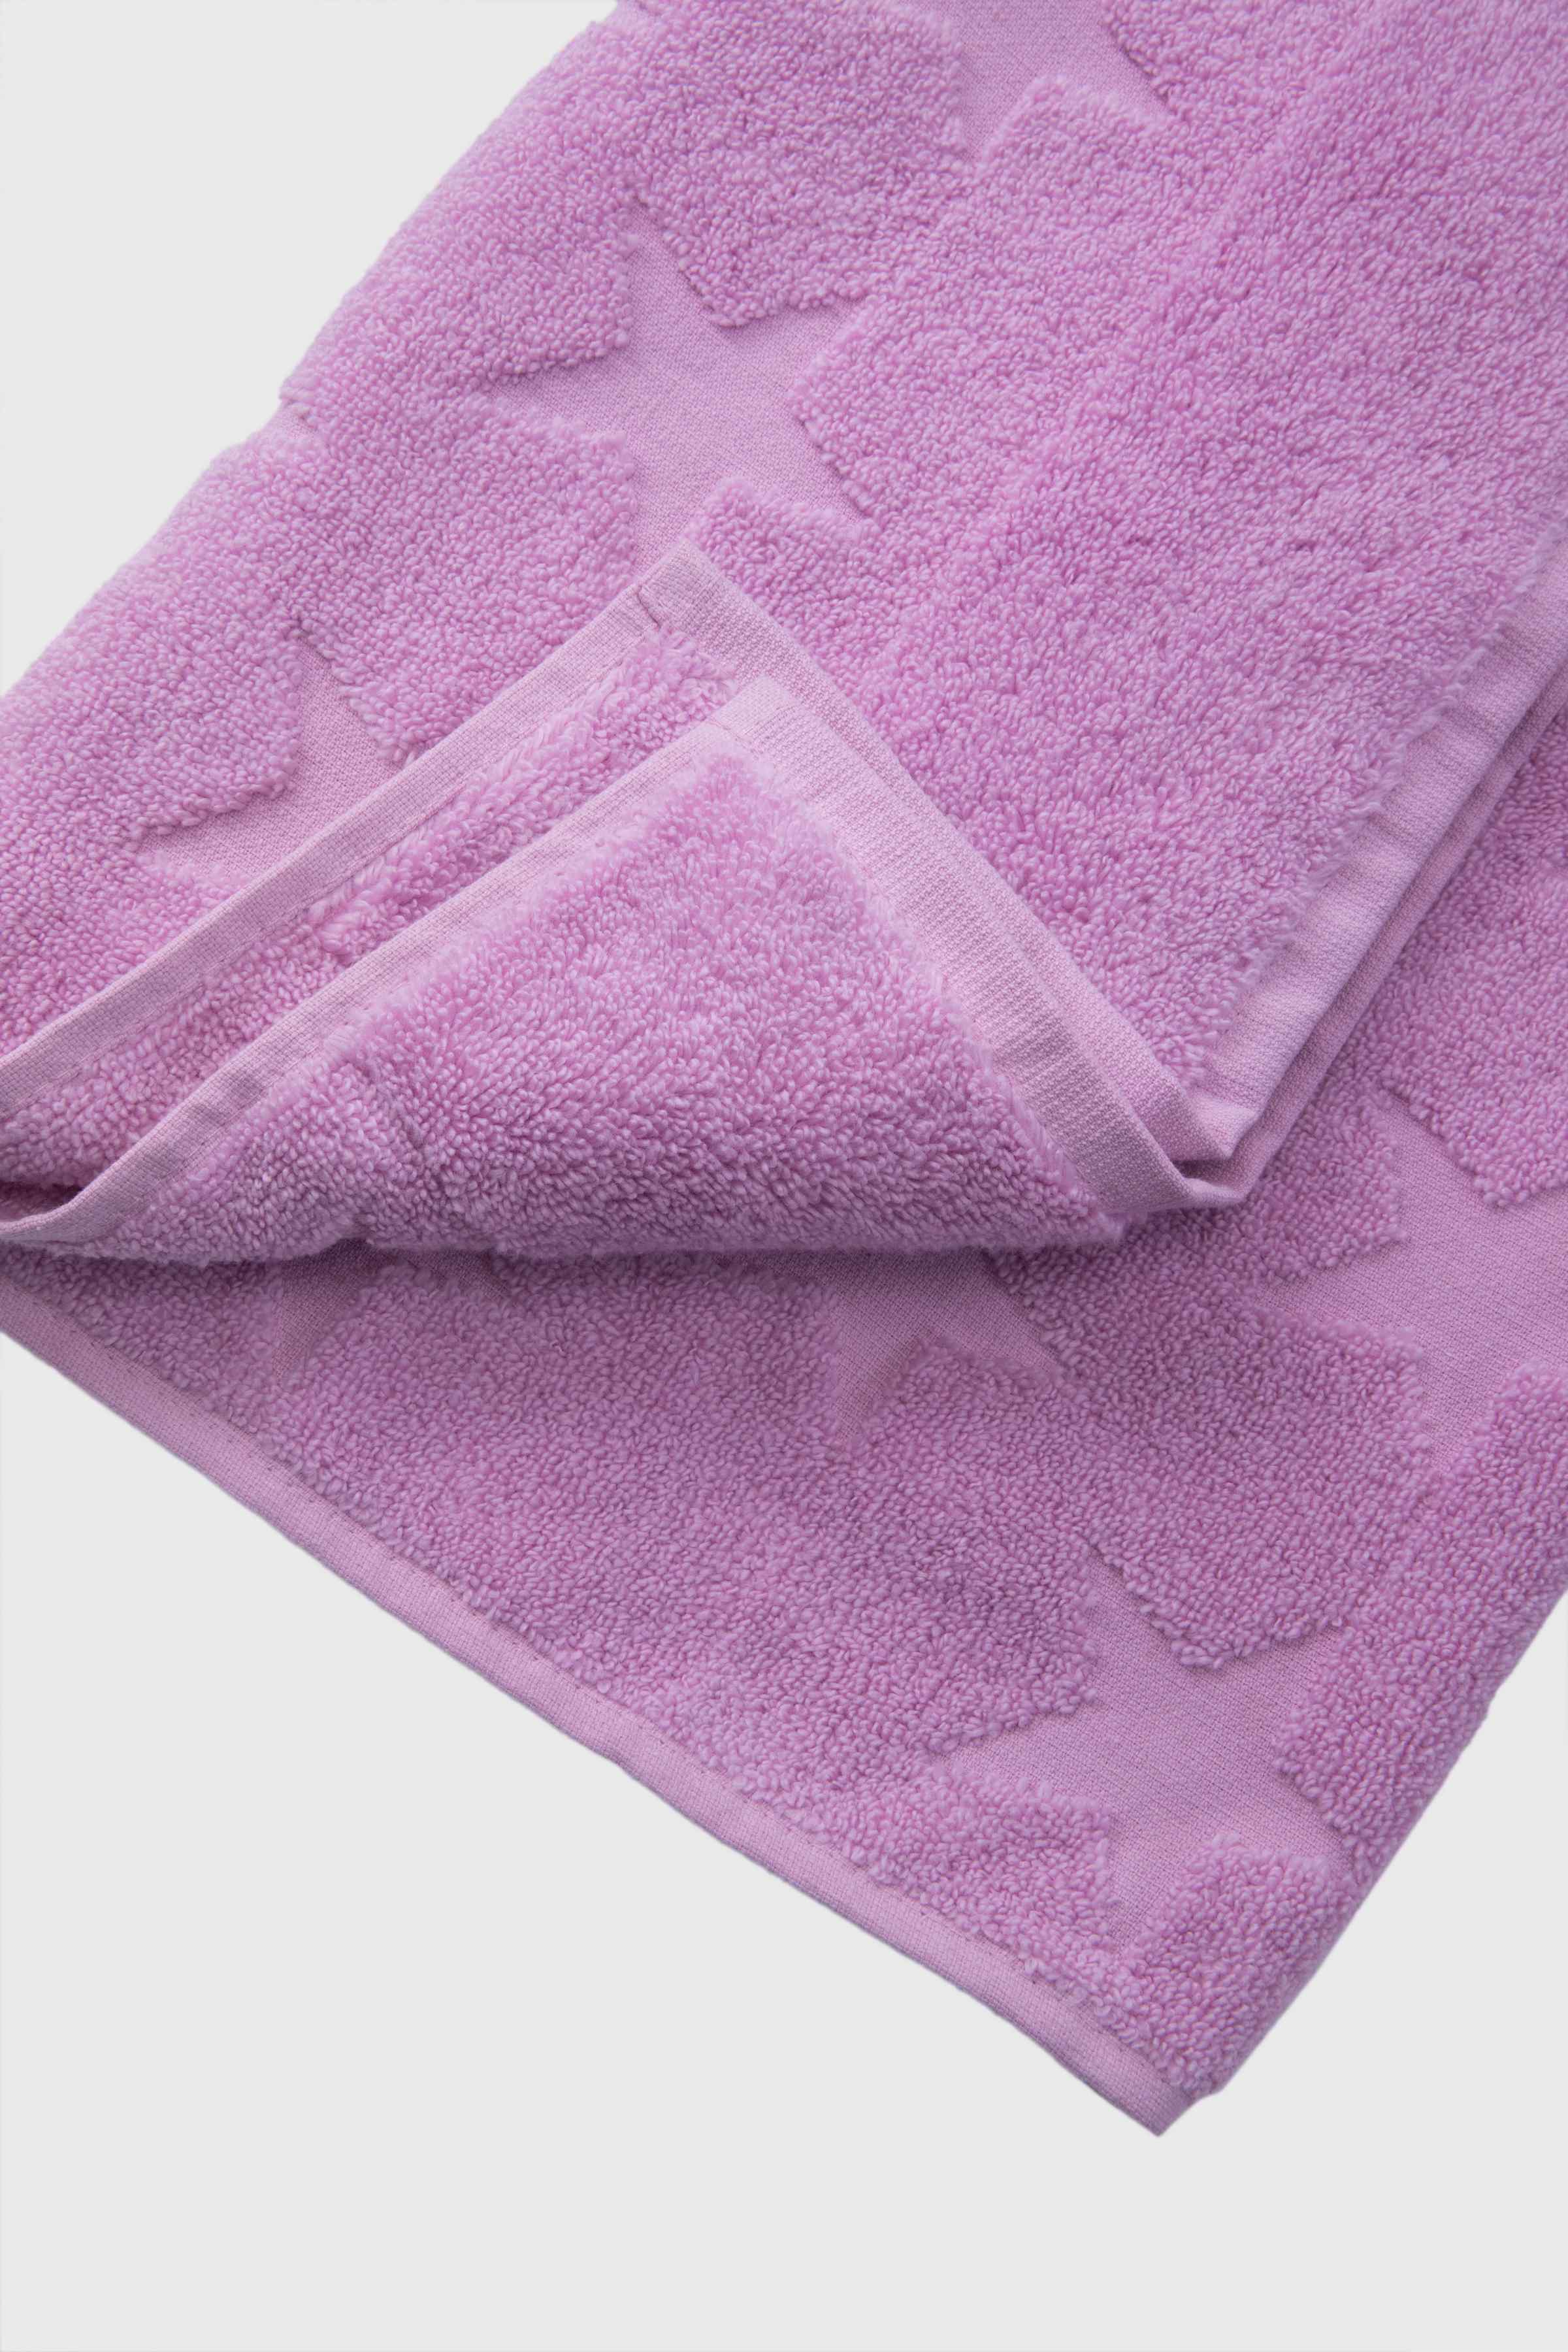 Sapphire Lillac Star - Hand Towel